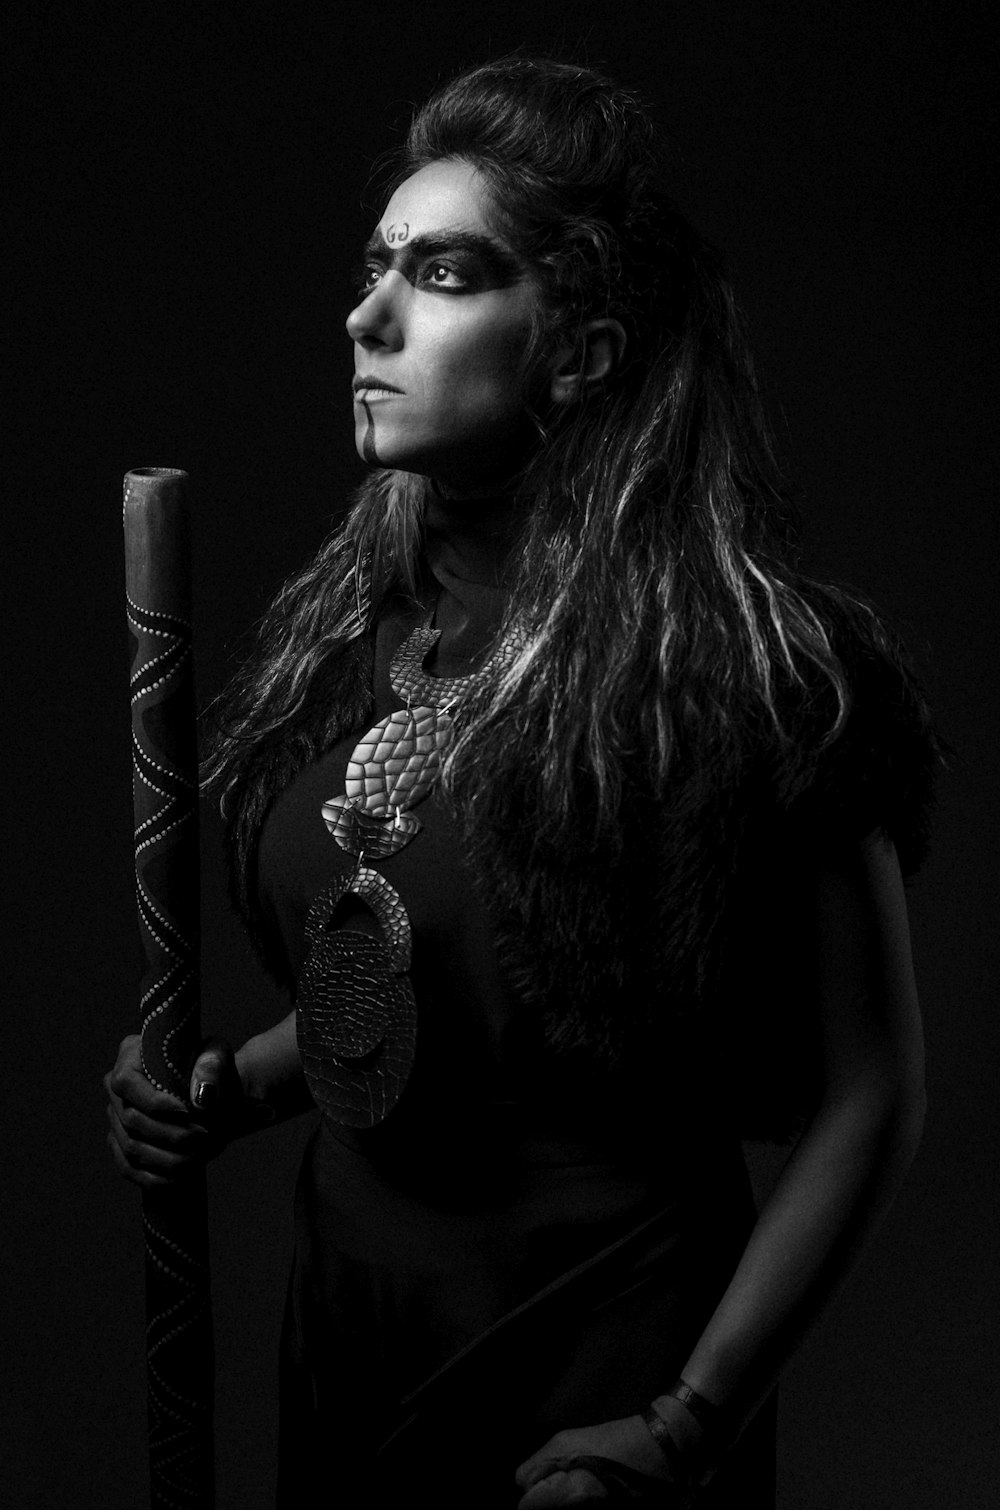 a woman with long hair holding a baseball bat